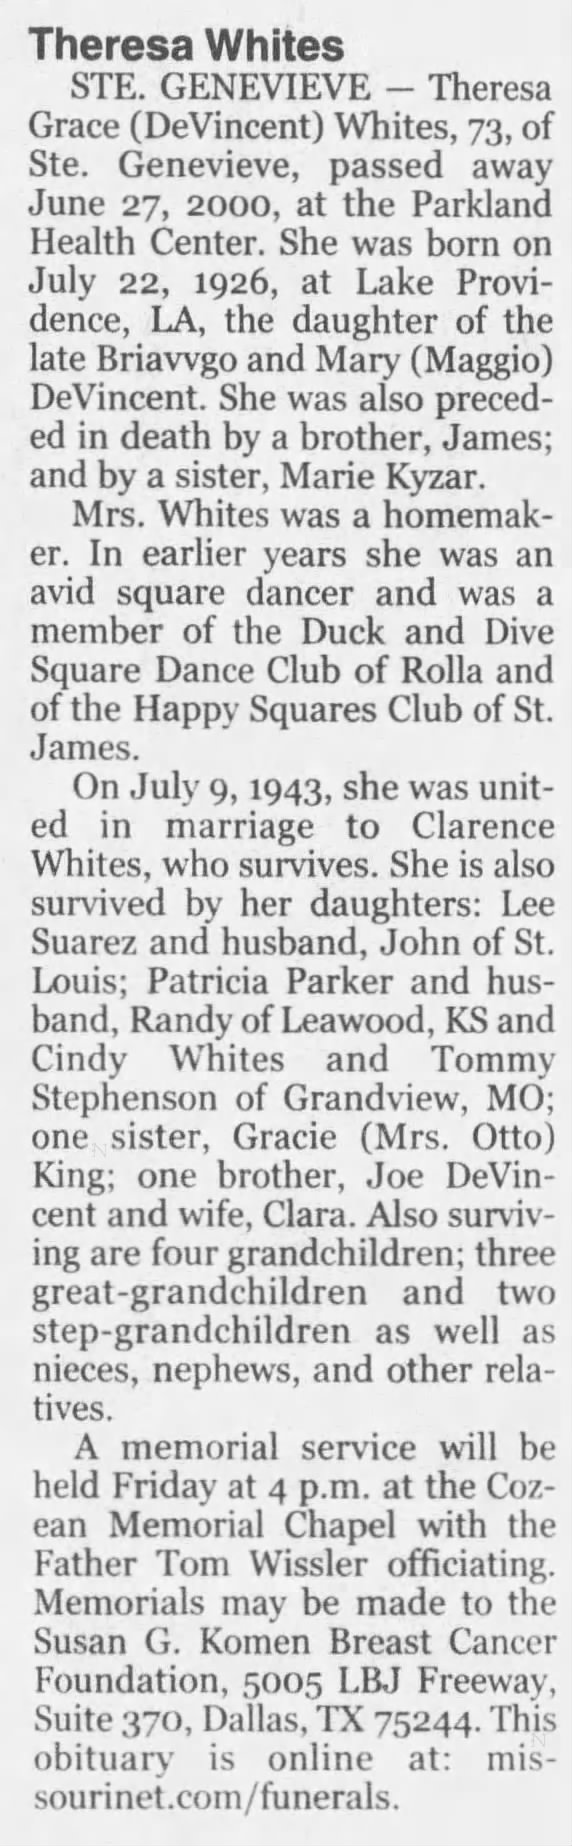 Obituary for Theresa Grace Whites, 1926-2000 (Aged 73)